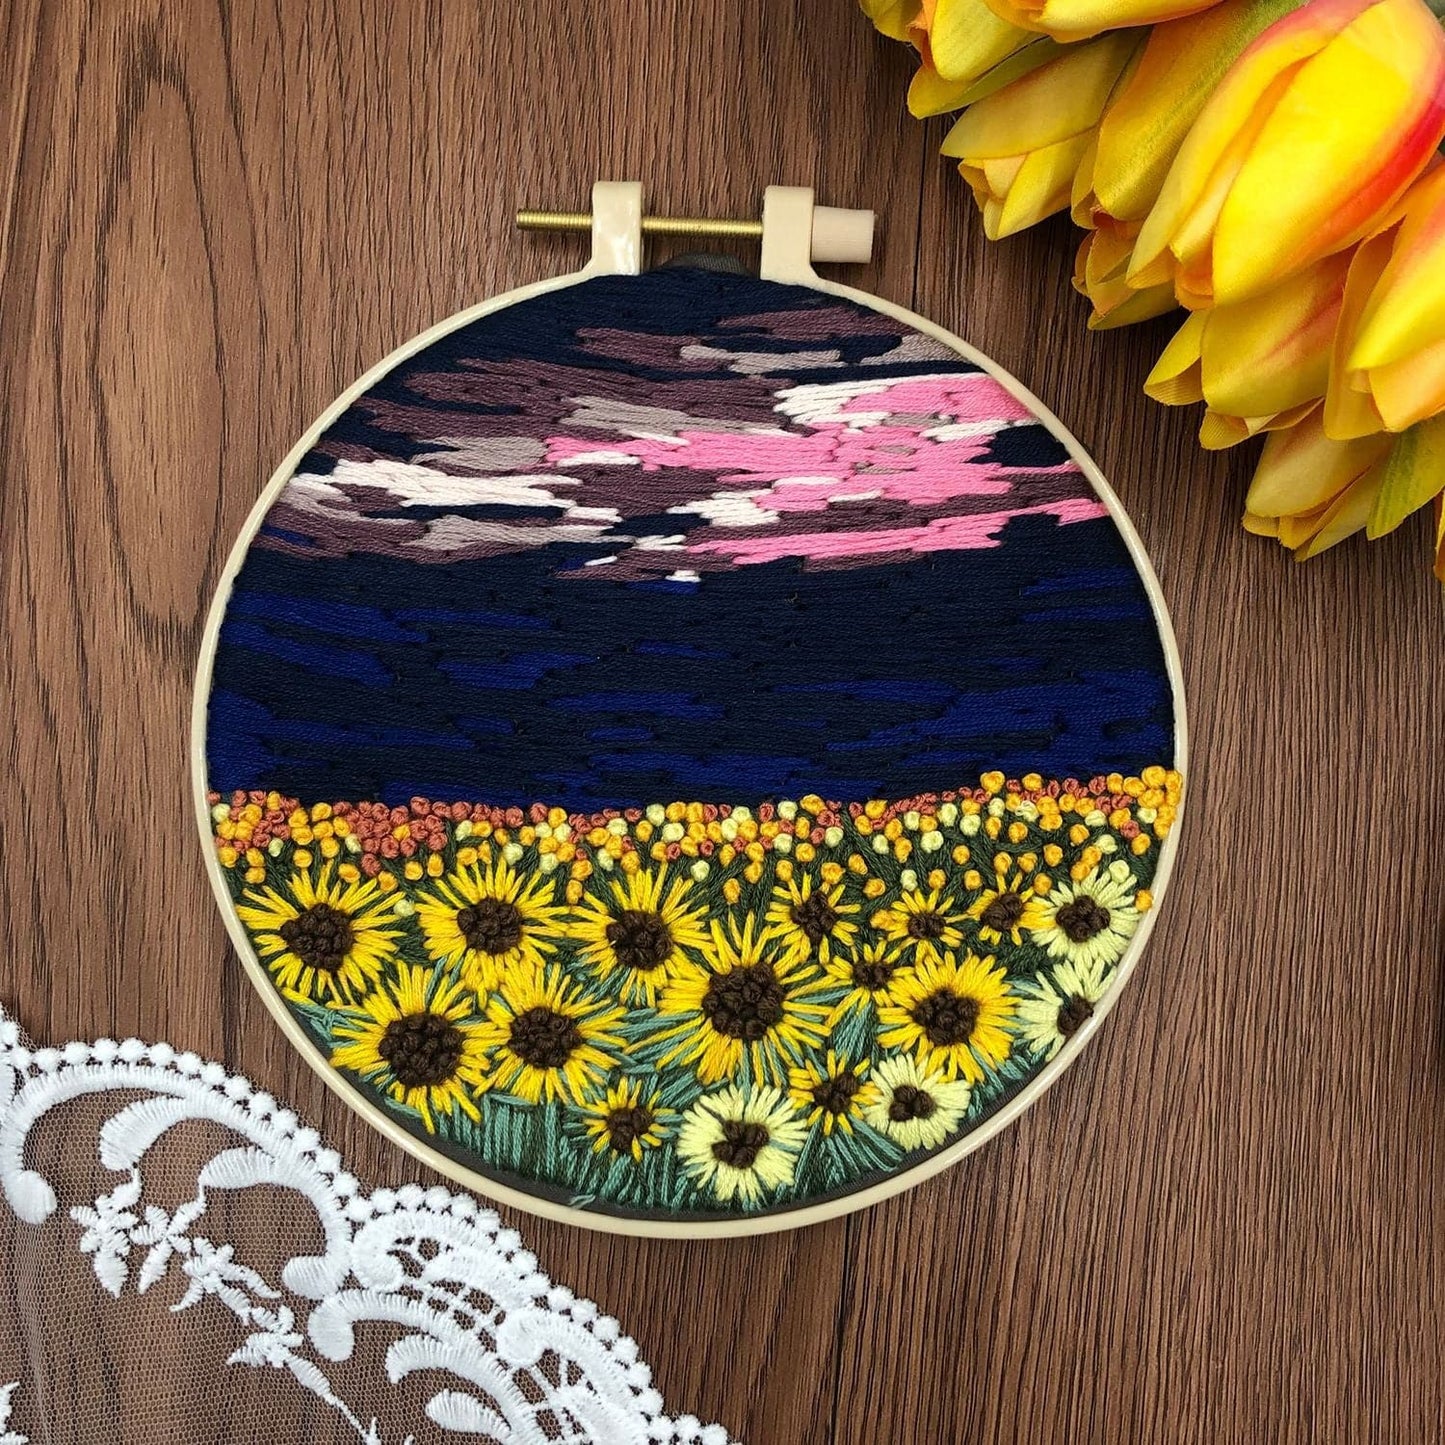 Flower Field-embroidery ktclubs.com